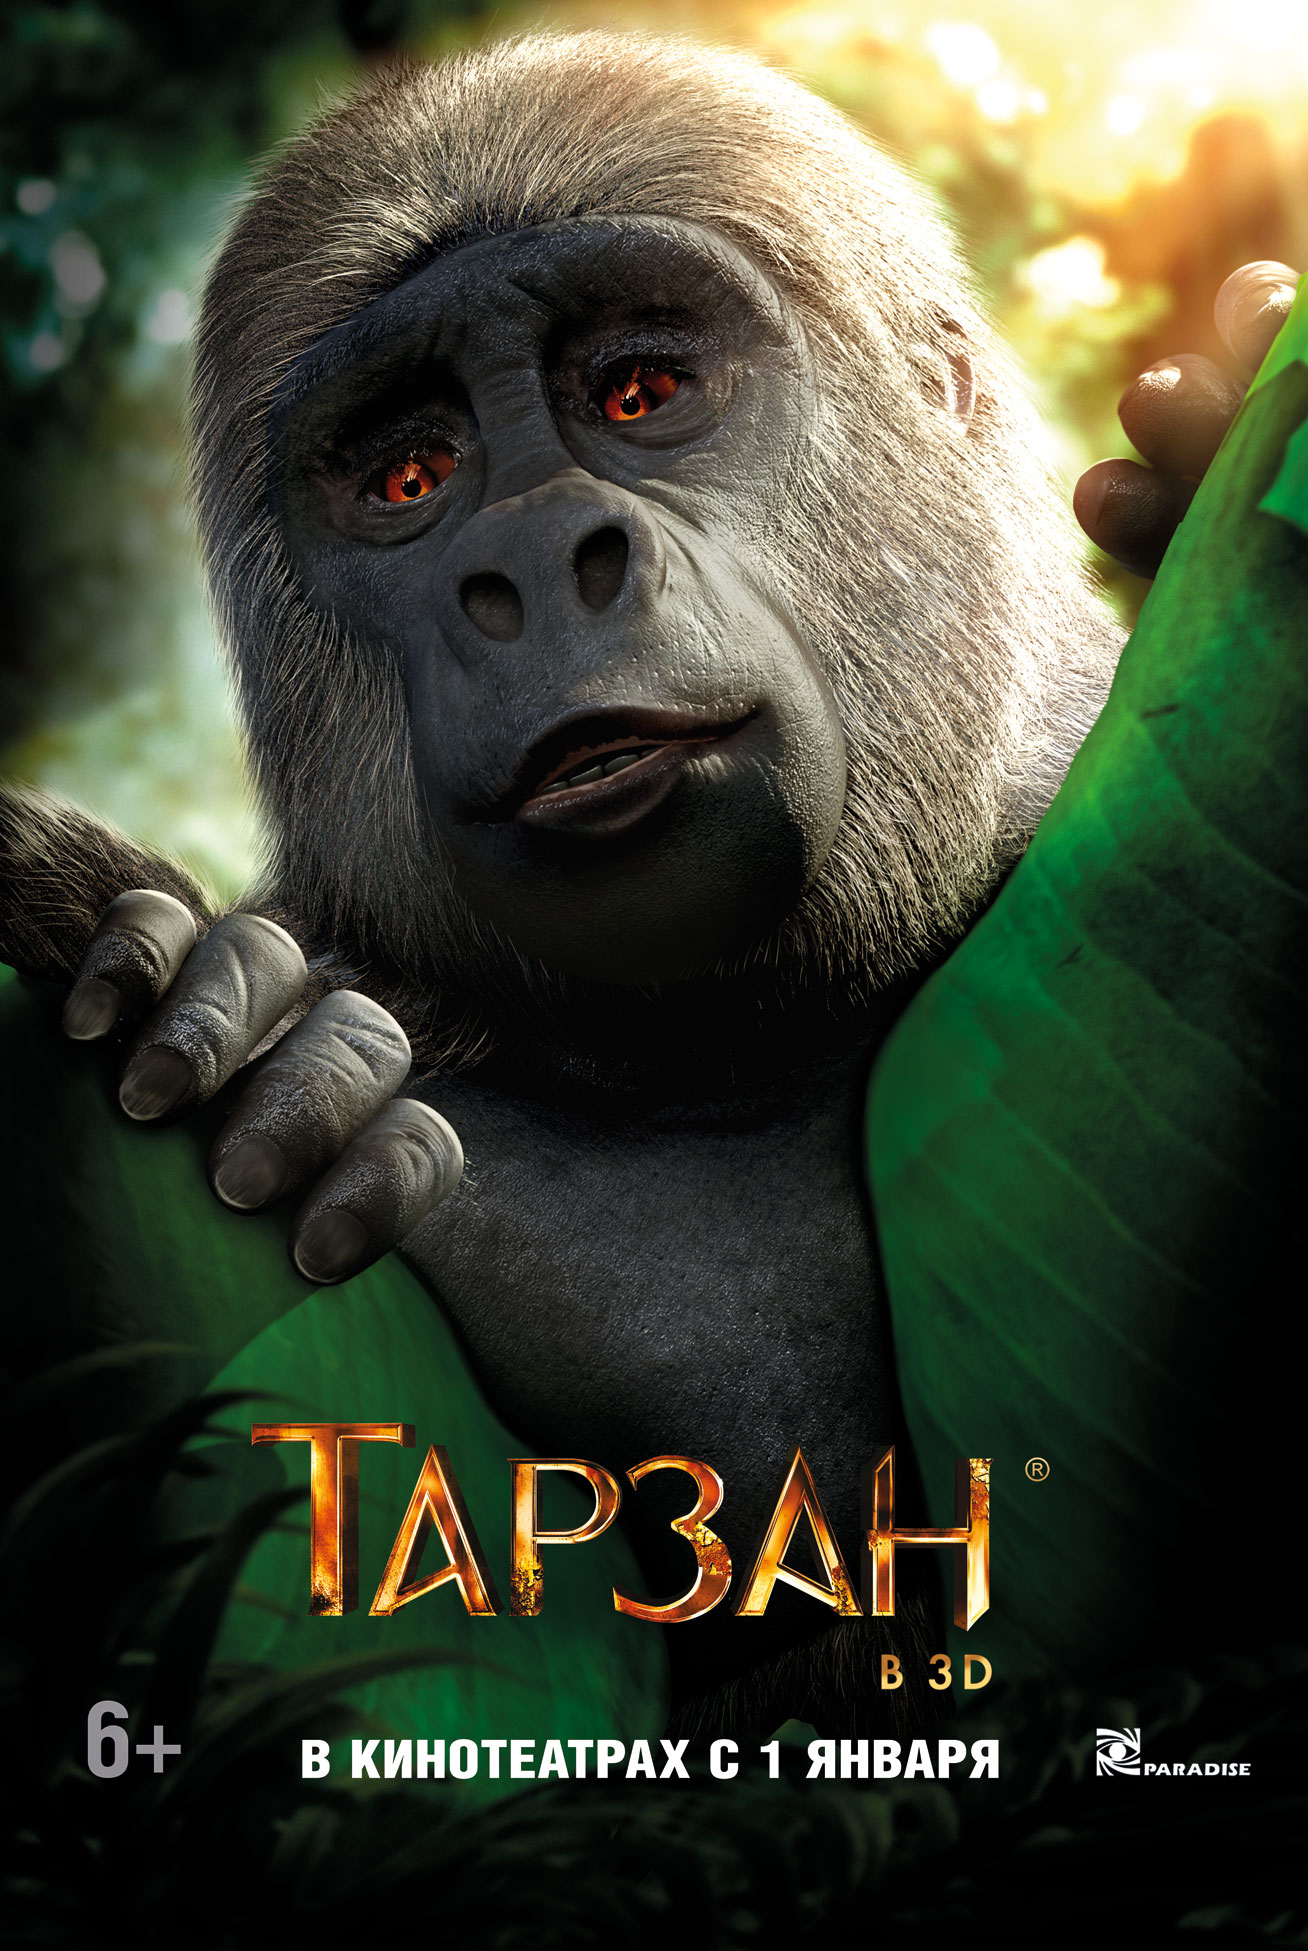 Tarzan (#2 of 9): Mega Sized Movie Poster Image - IMP Awards